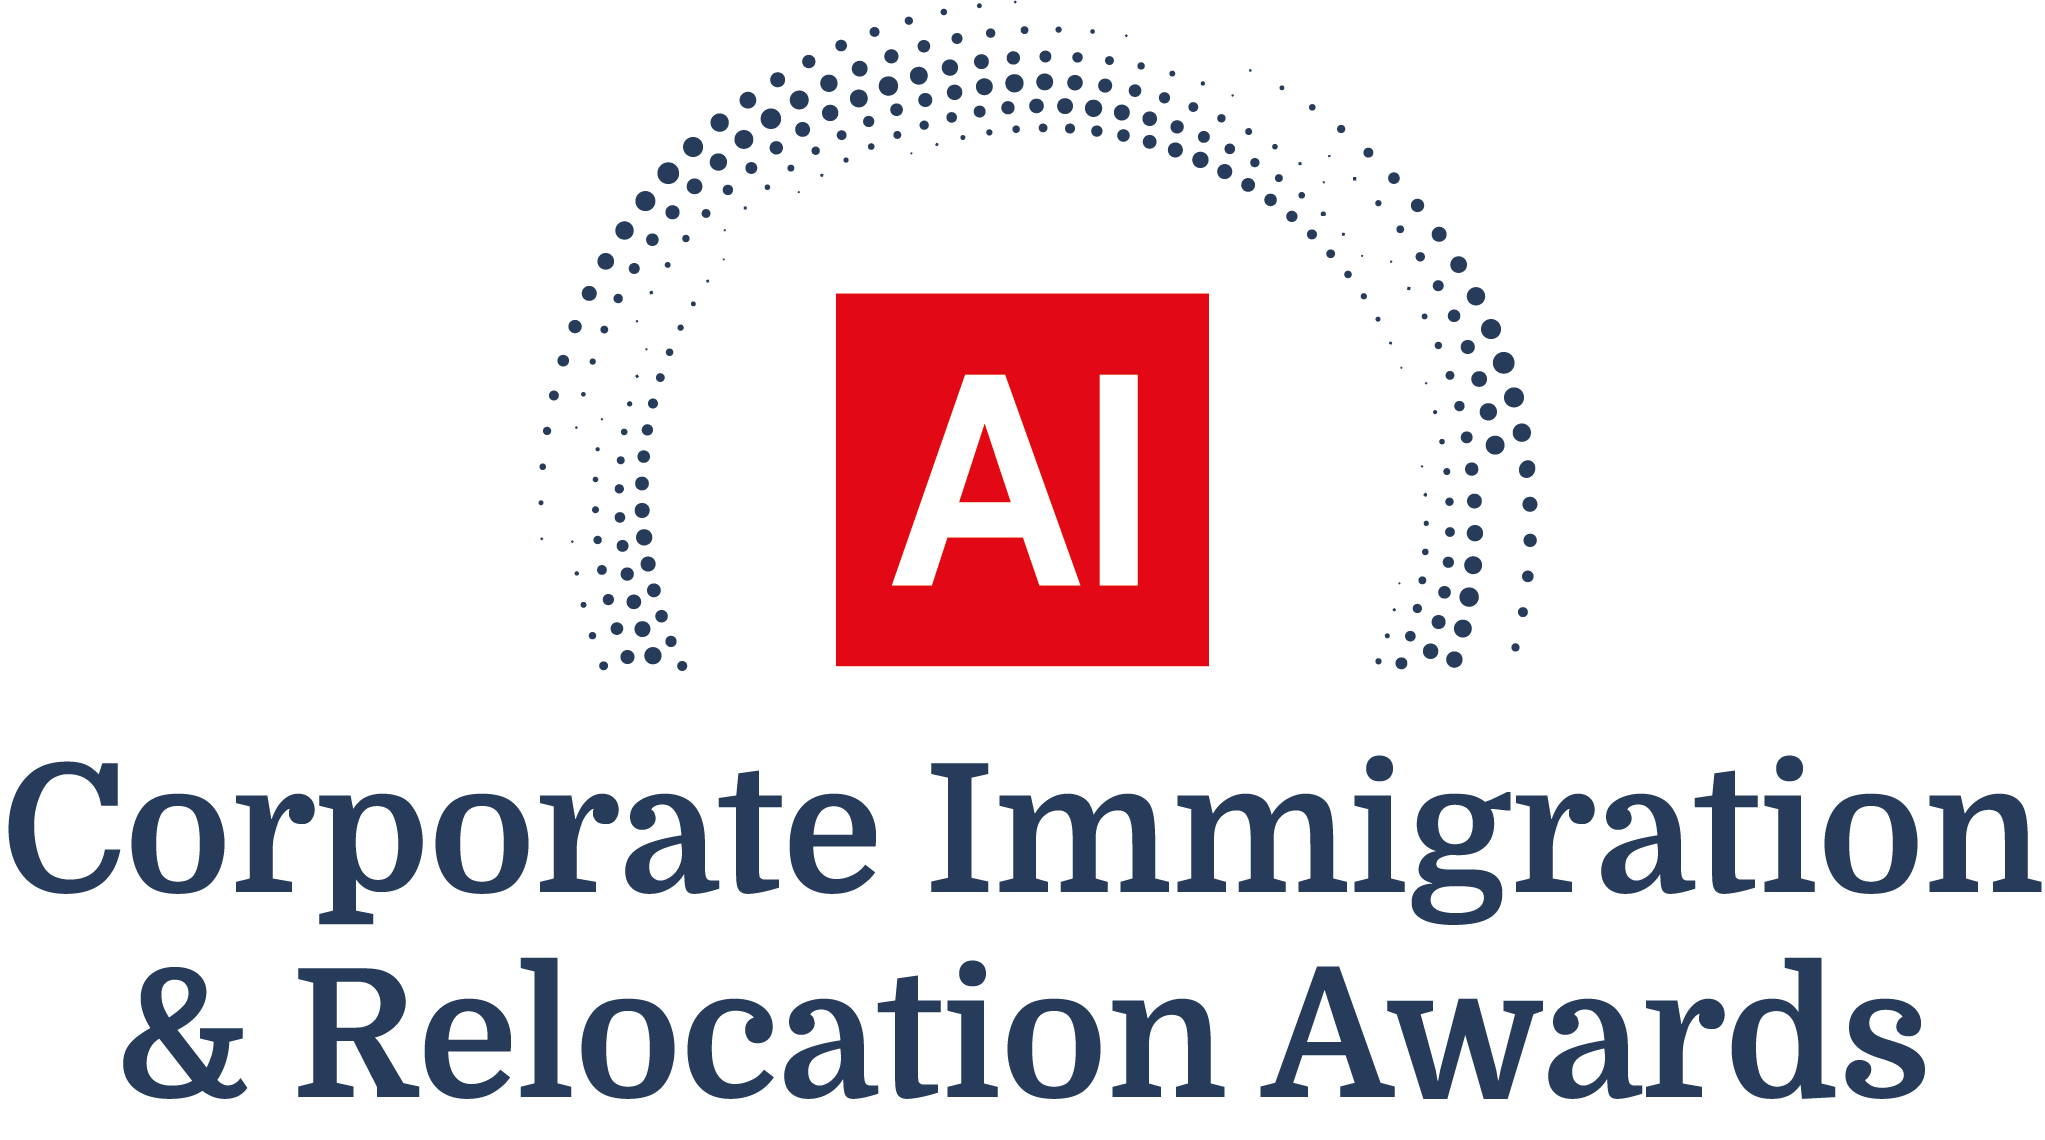 Award Logo - Corporate Immigration & Relocation Awards